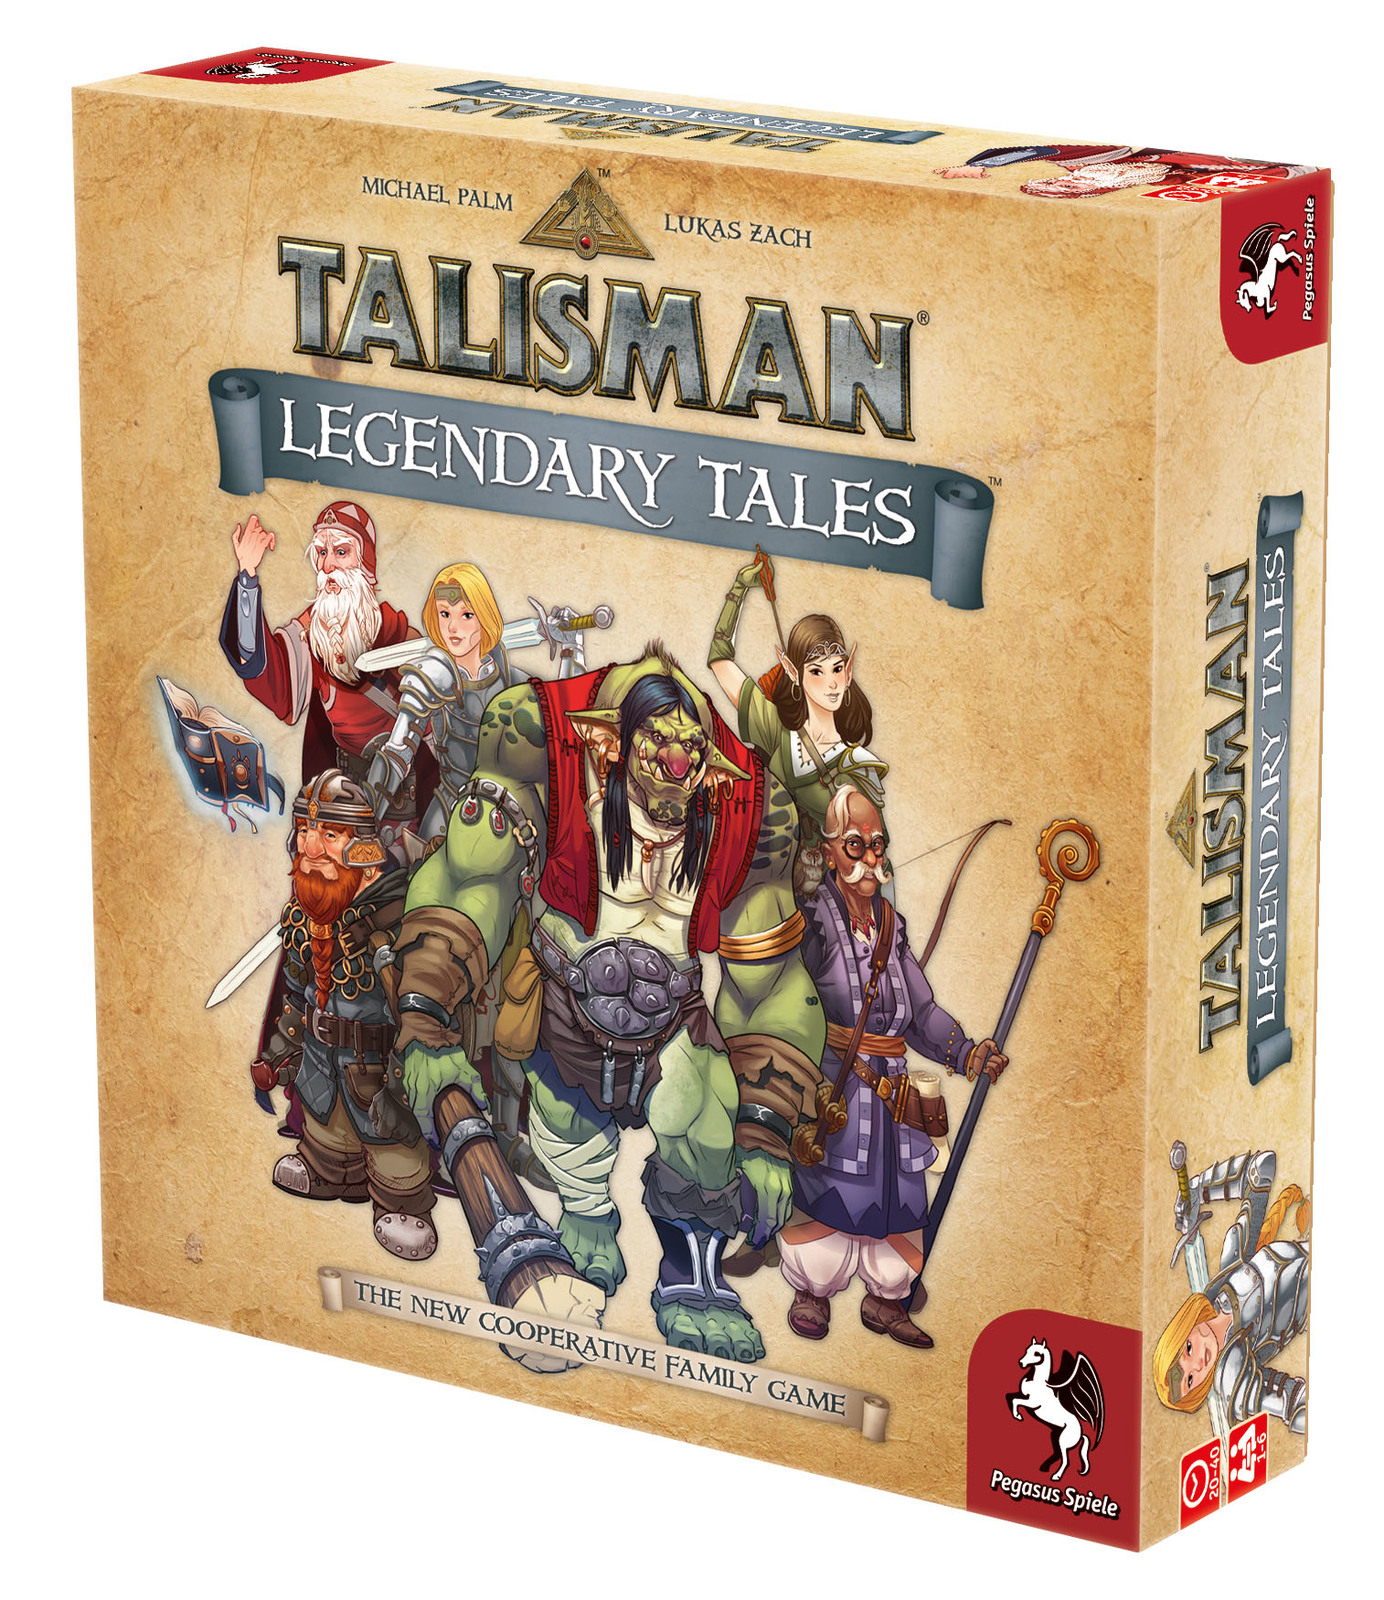 Игра Legendary Tales. Игра талисман вождя. Talisman Board game Art. Talisman настольная игра купить. Many centuries ago